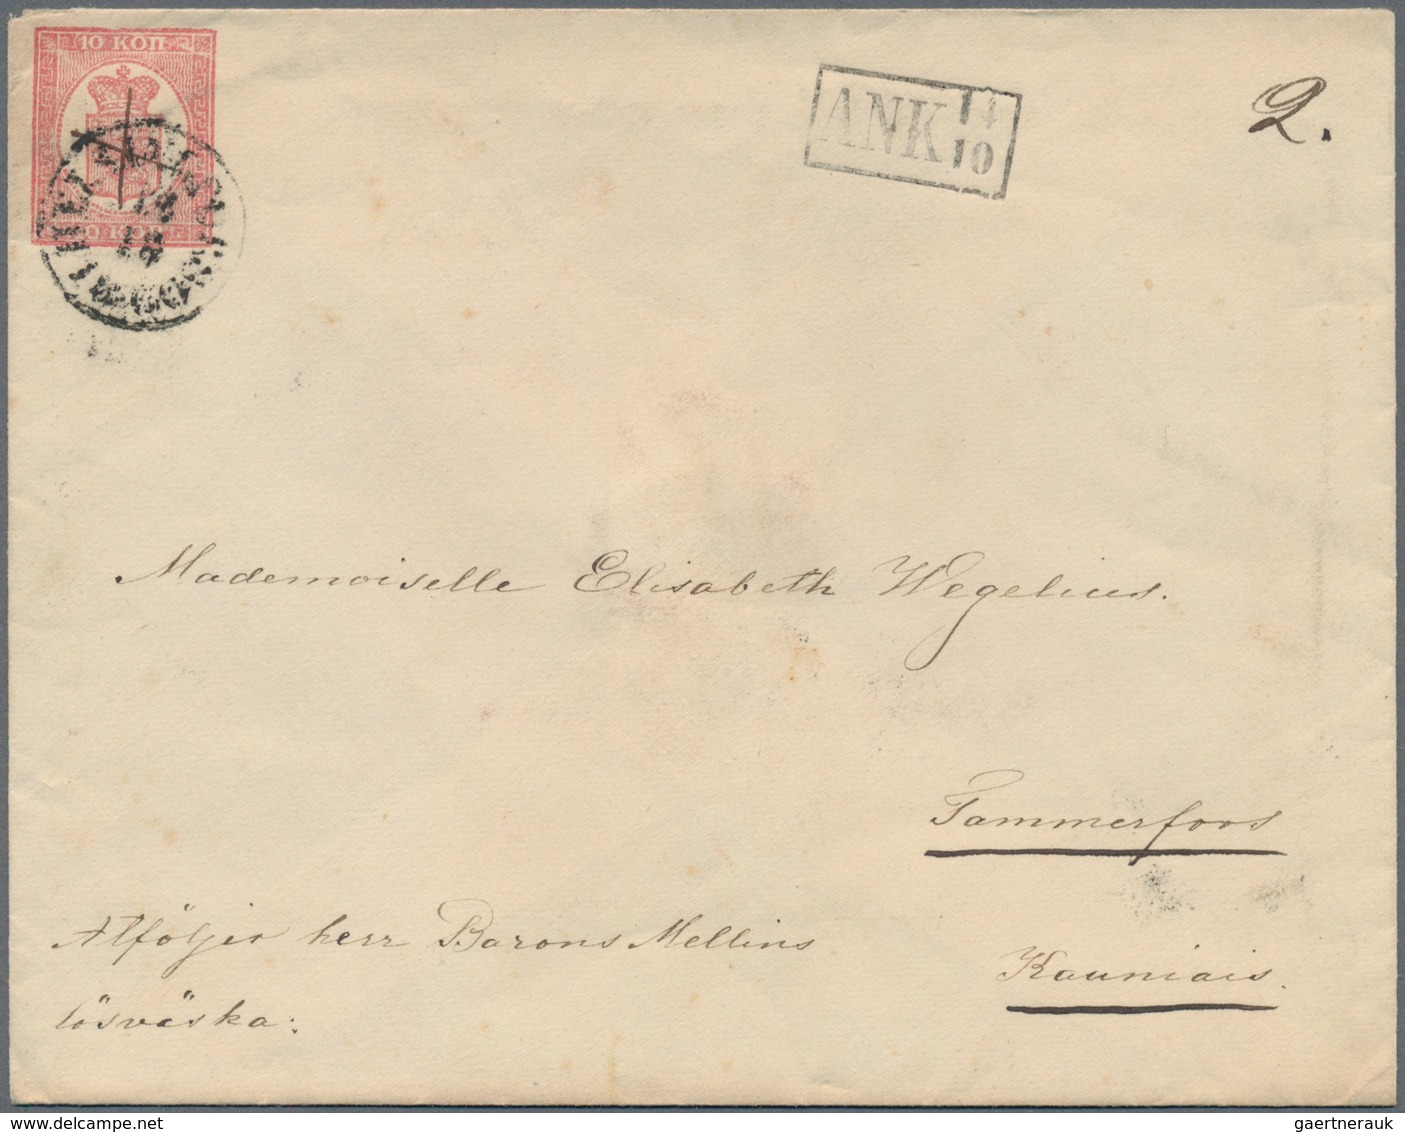 Finnland - Ganzsachen: 1860, 10 Kop Carmine Postal Stationery Cover From Helsingfors To Tammerfors - Postal Stationery